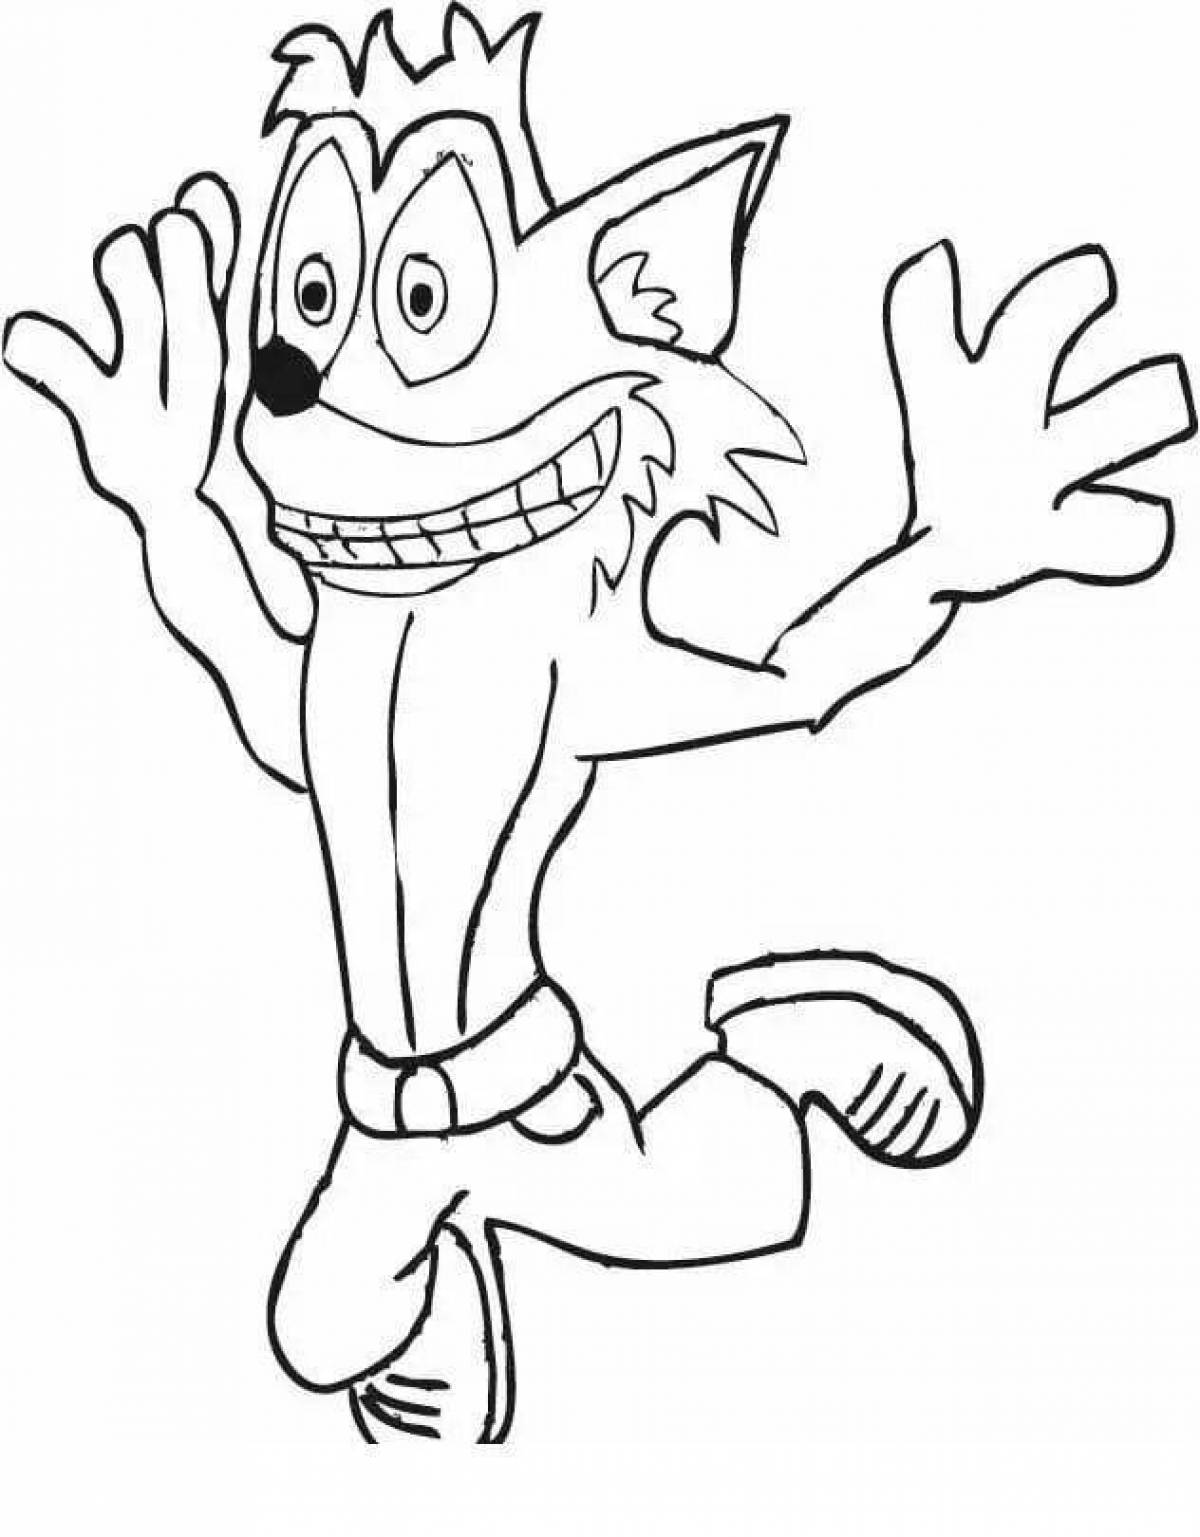 Crazy bandicoot coloring page